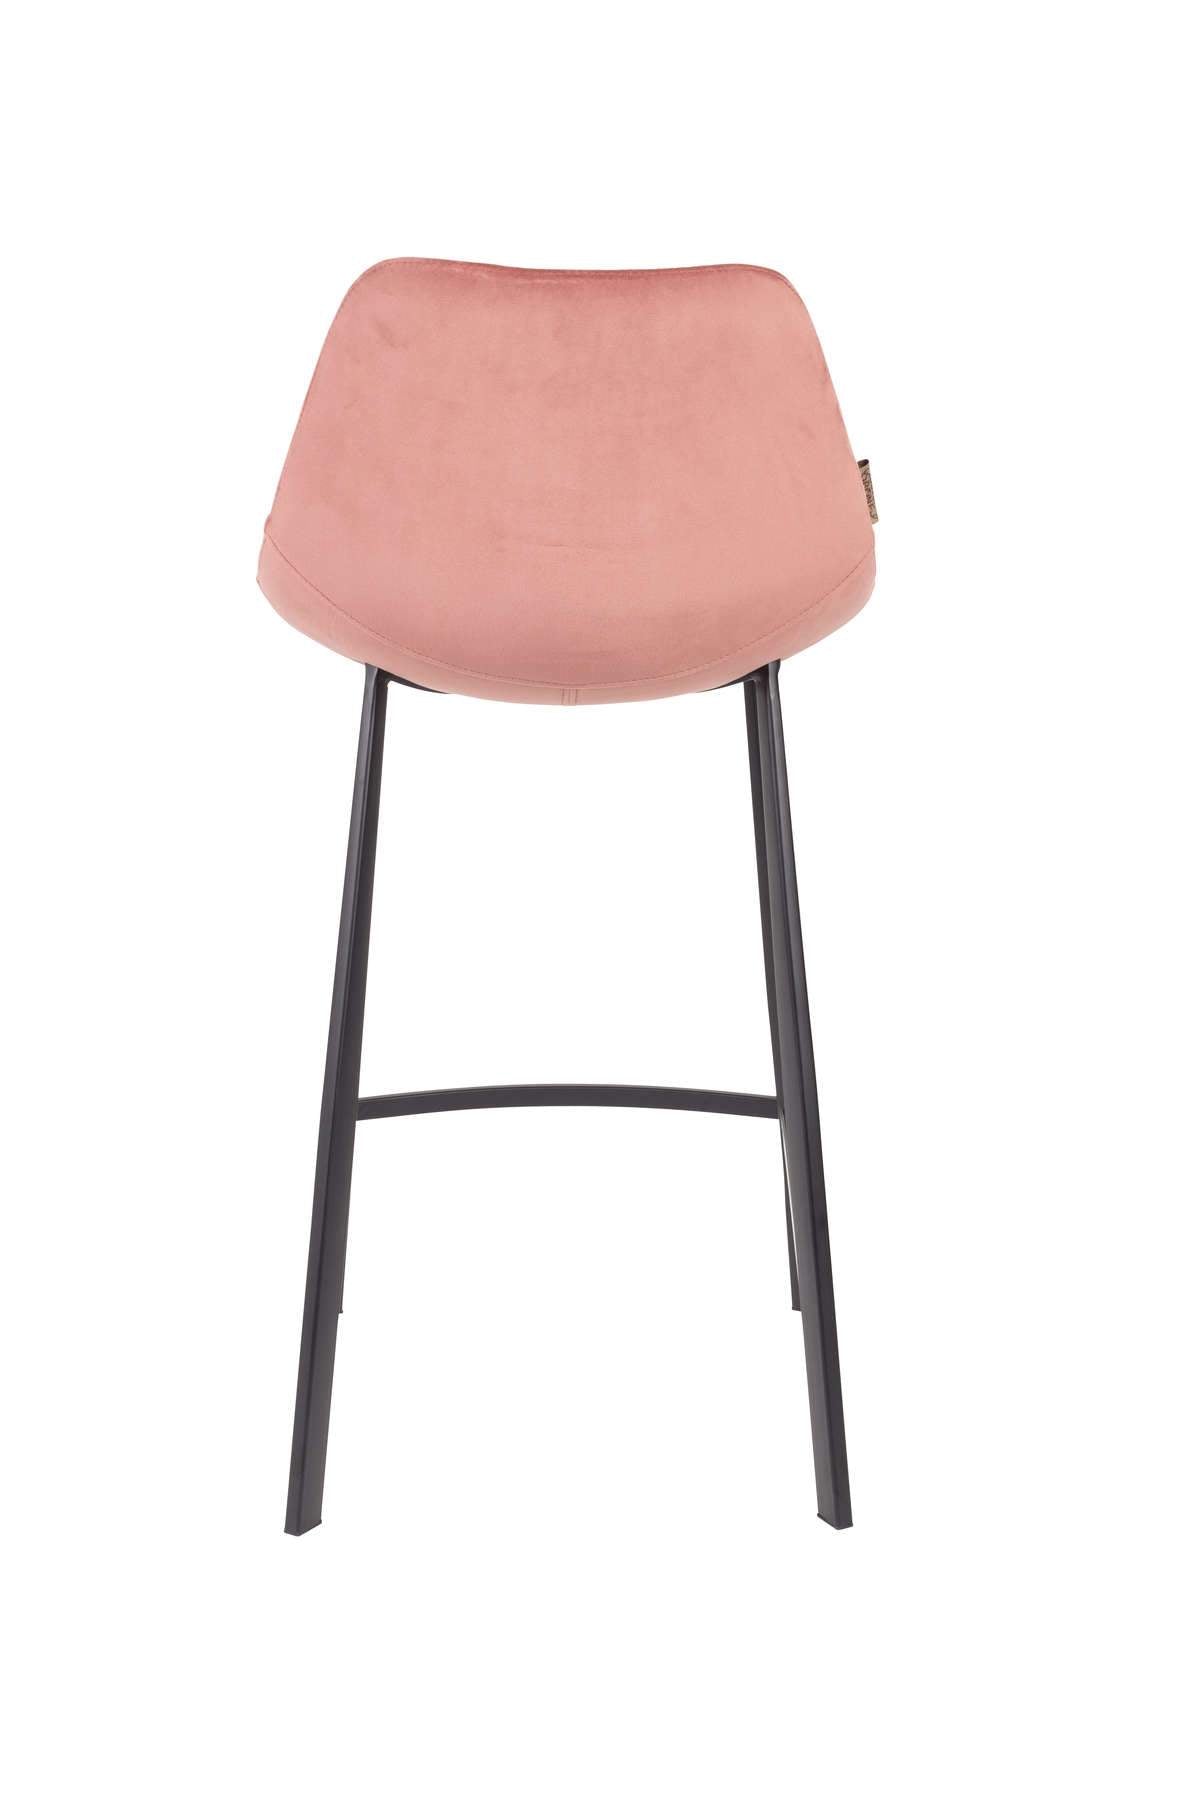 FRANKY bar chair pink, Dutchbone, Eye on Design